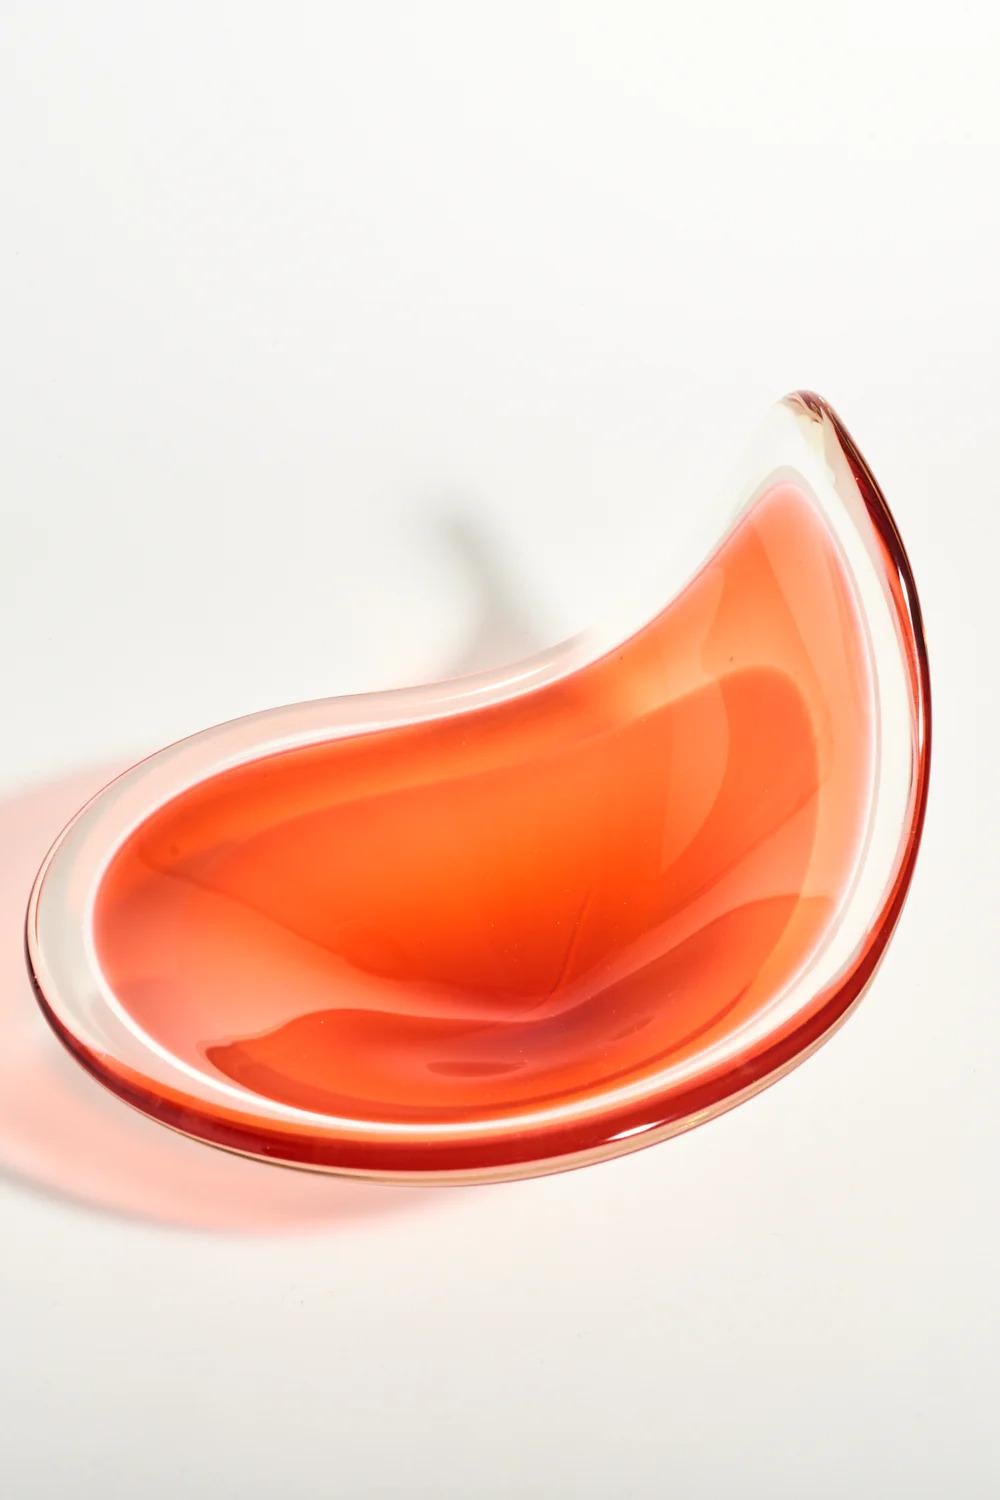 Beautiful Swedish art glass bowl, graceful wave shape, lovely blood-orange color tones framed in clear glass. 

